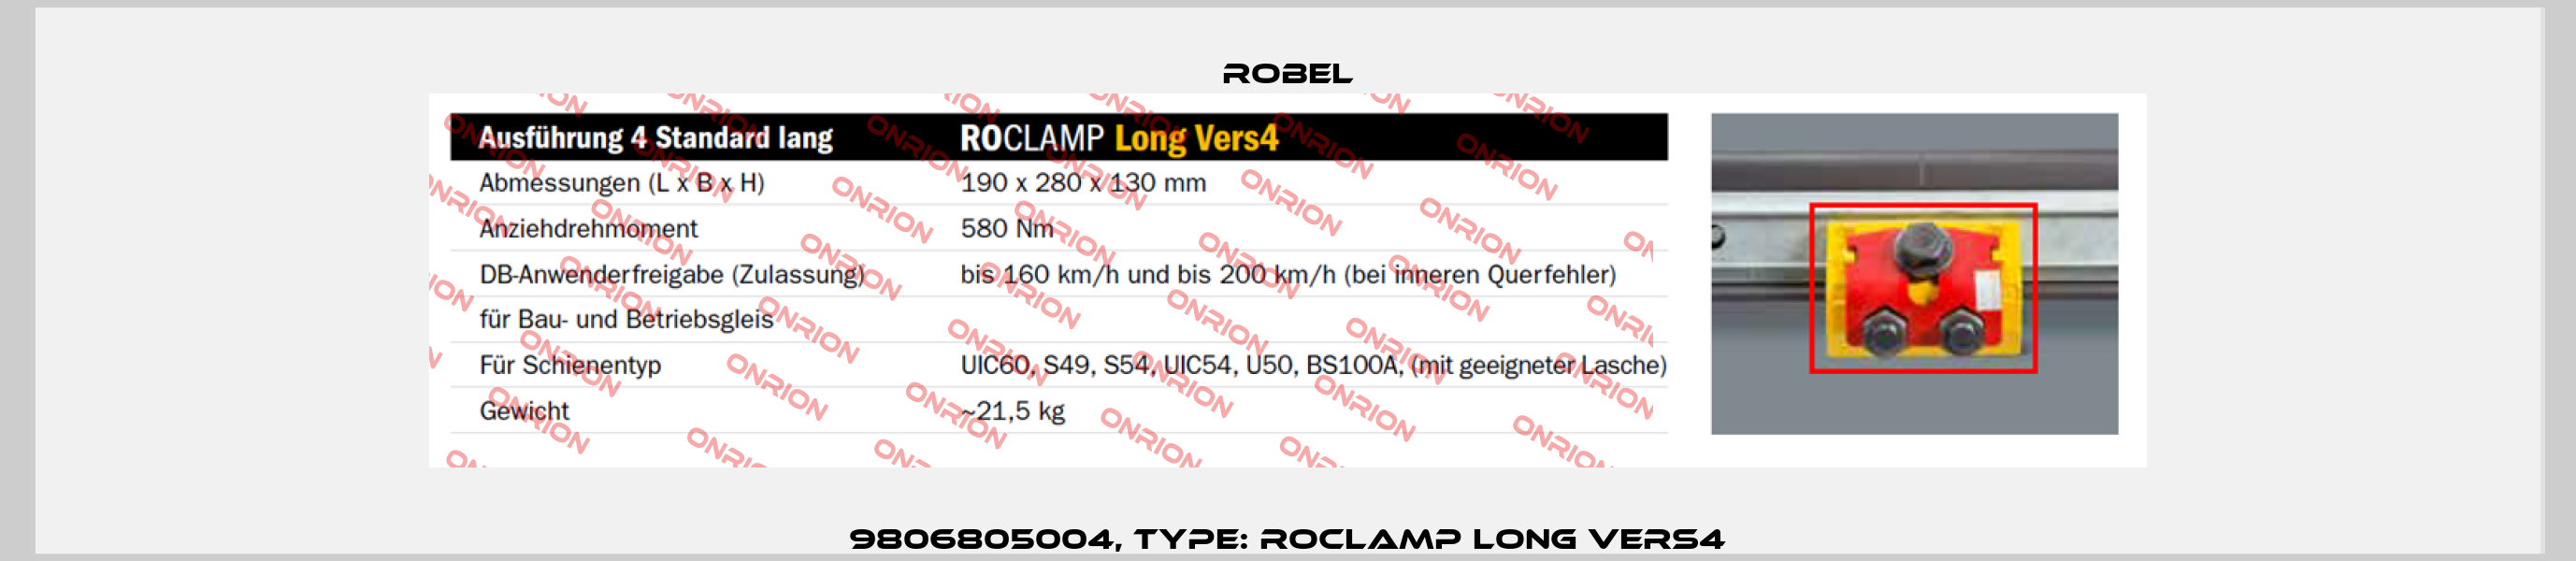 9806805004, Type: ROCLAMP Long Vers4 Robel